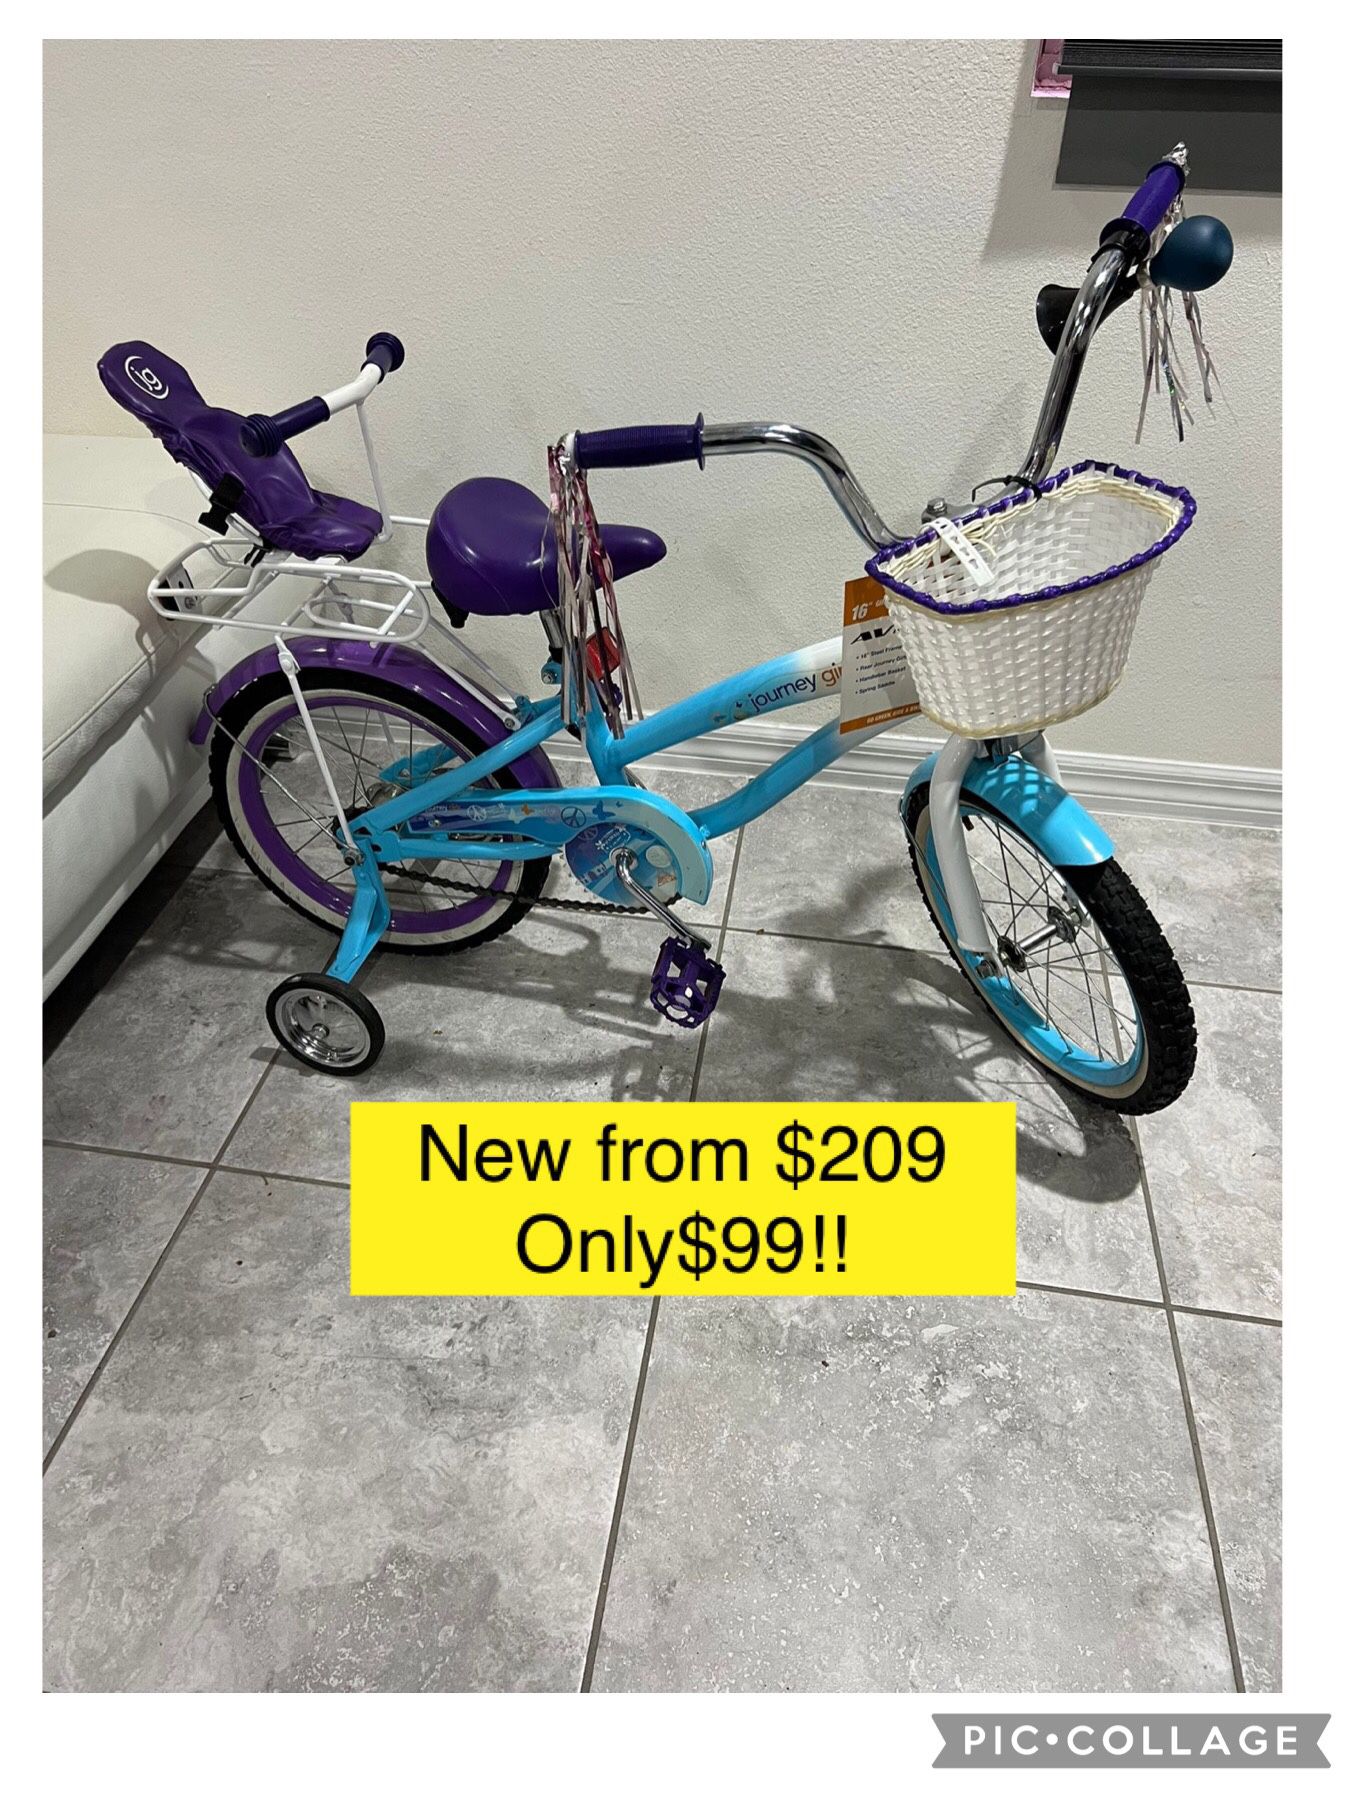 New from $209 only $99!! Avigo 16 inch Journey Girls Bike kid, Doll extra seat / Bicicleta niña nueva